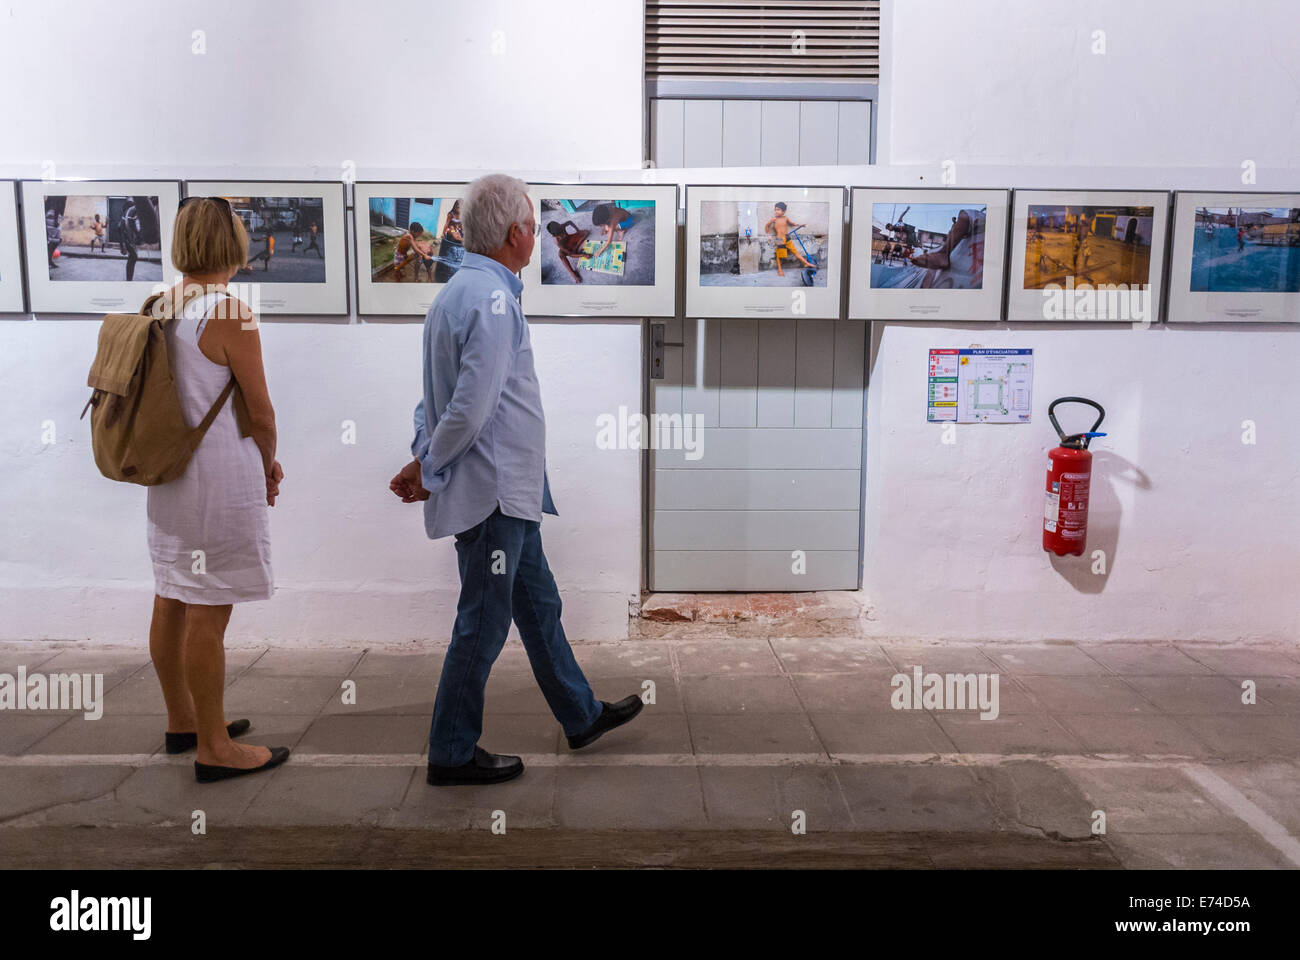 Perpignan, Frankreich, Touristen in 'Visa Pour l 'Image' Fotojournalismus-Festival-Fotografie-Galerie-Ausstellung Stockfoto